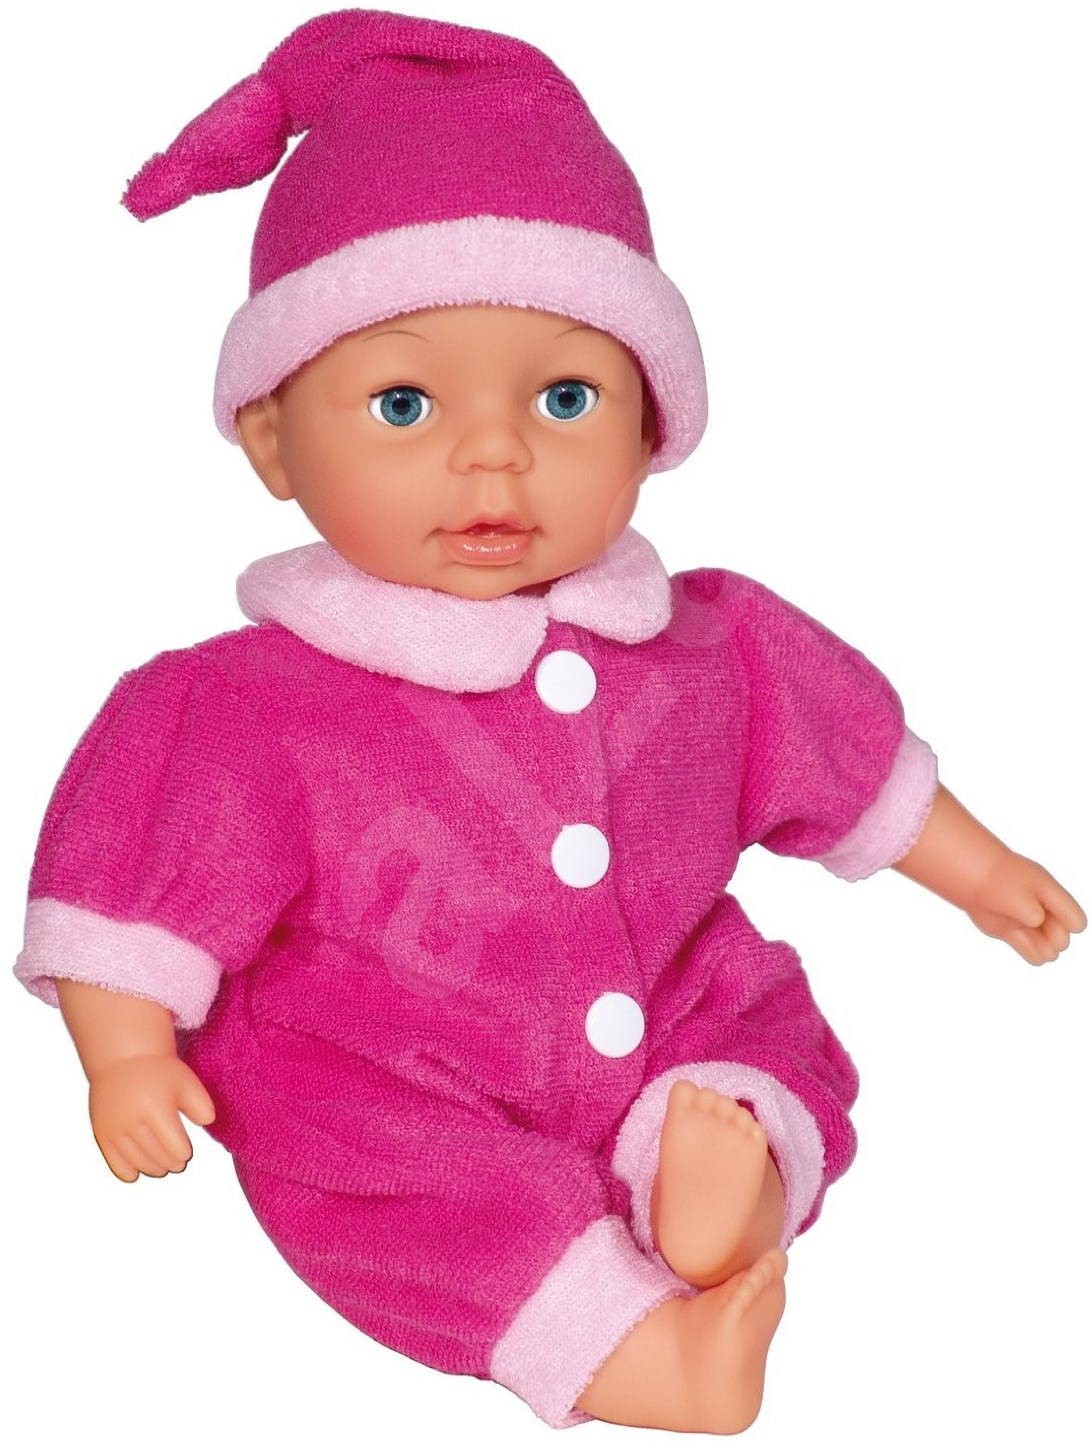 Cuddle Baby - Pink